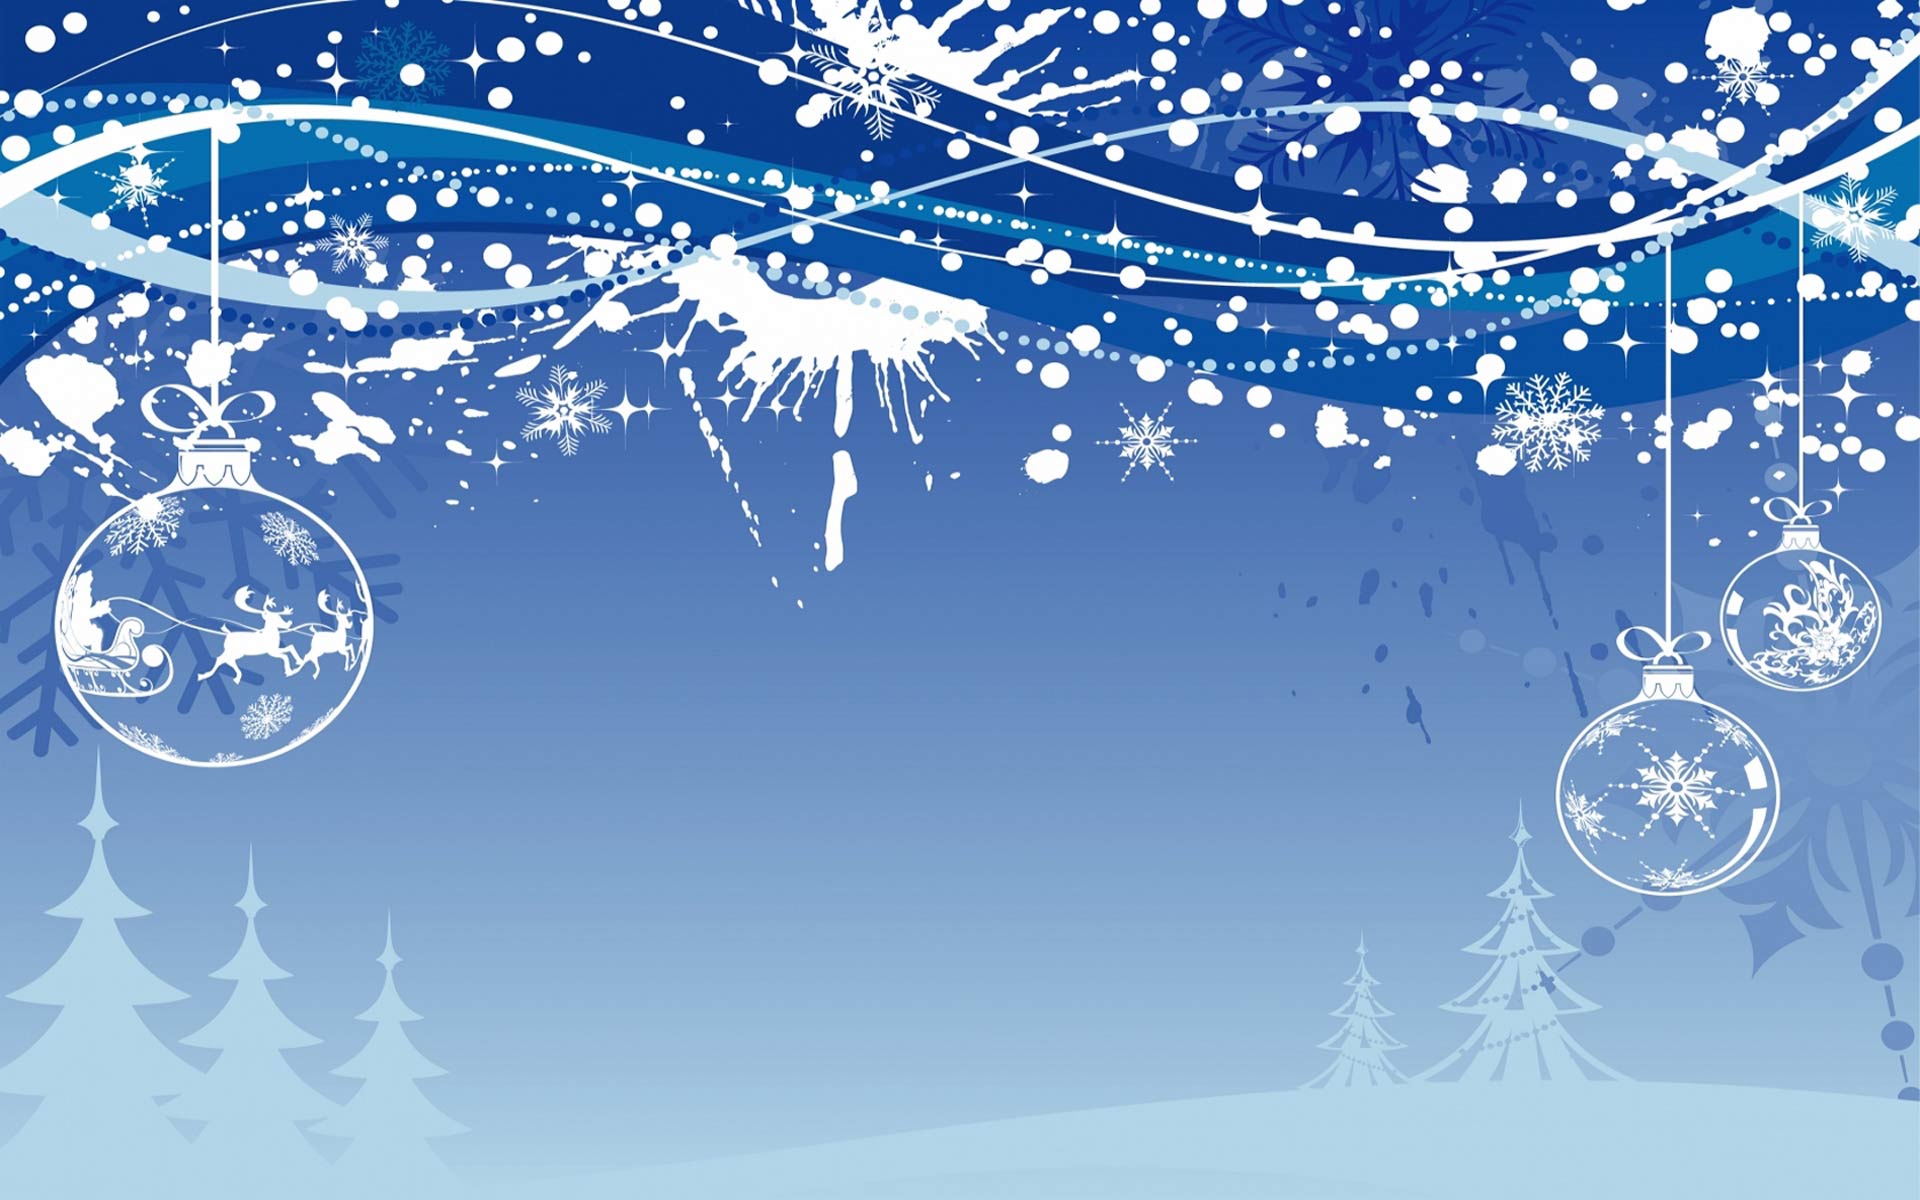 Christmas Images For Mobile Desktop Background Free Download